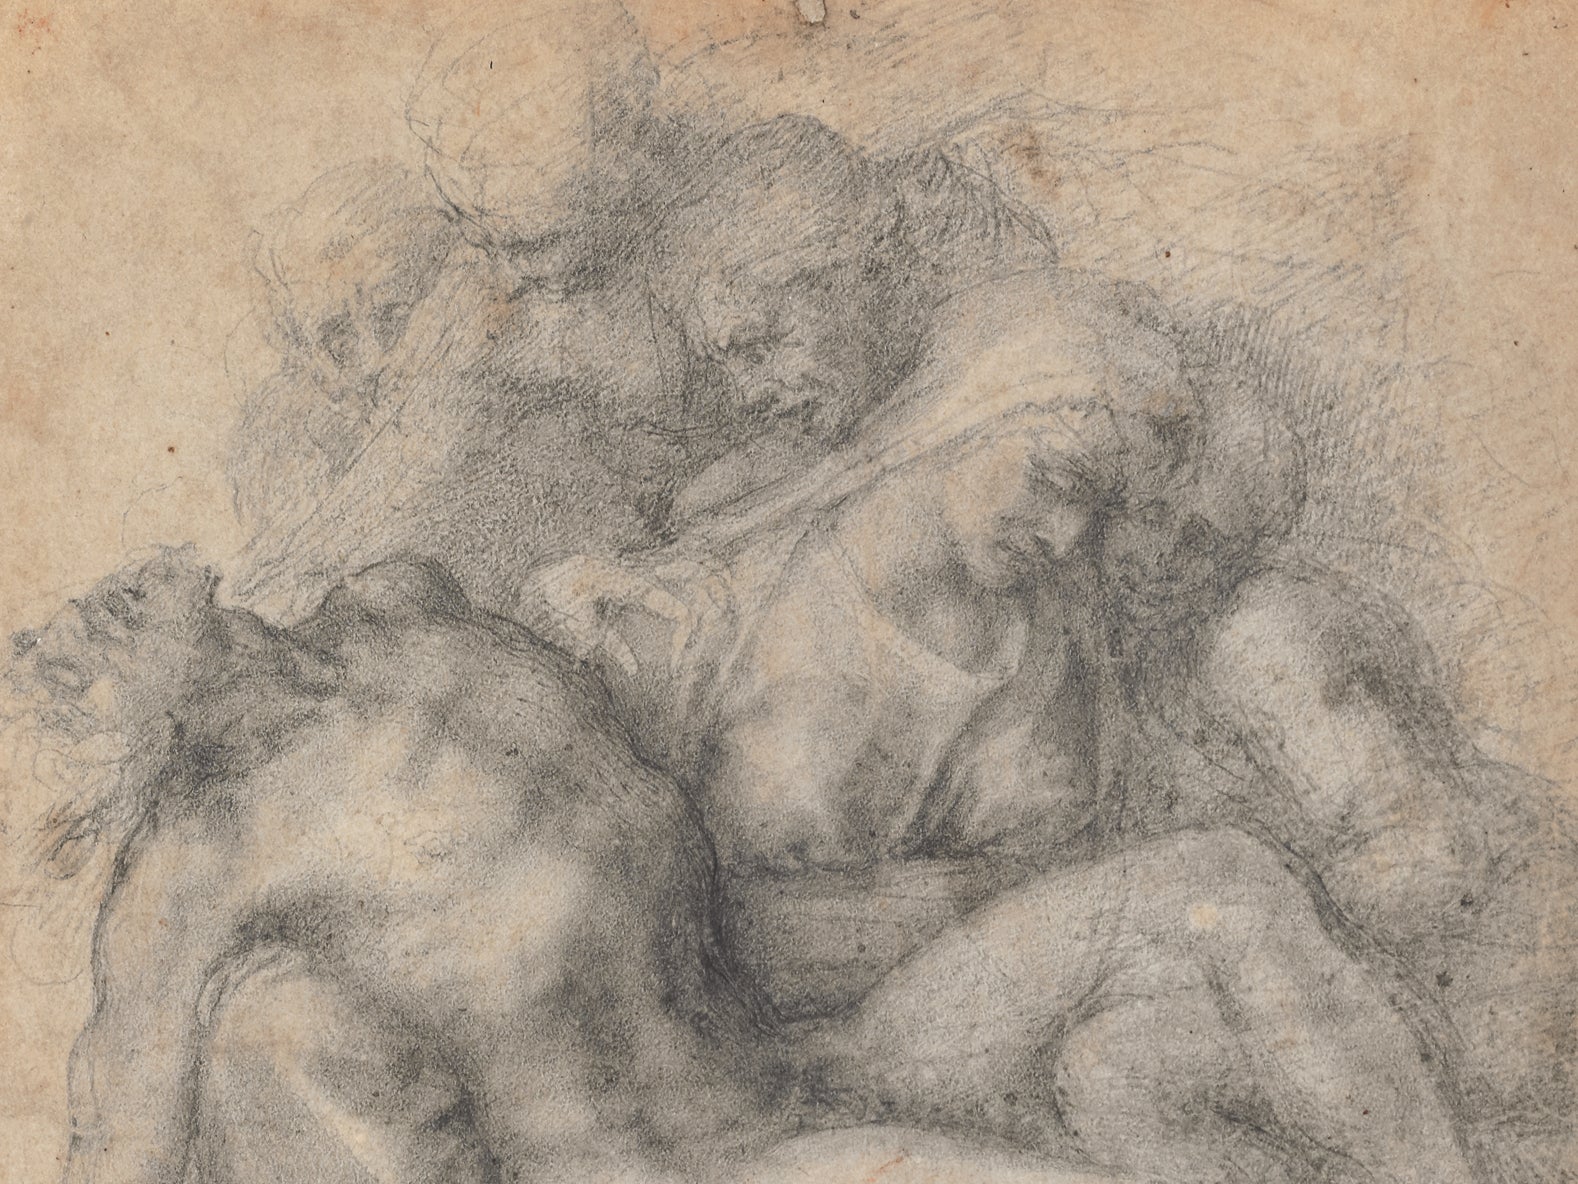 Michelangelo’s ‘Pieta’ features as part of the new British Museum exhibition